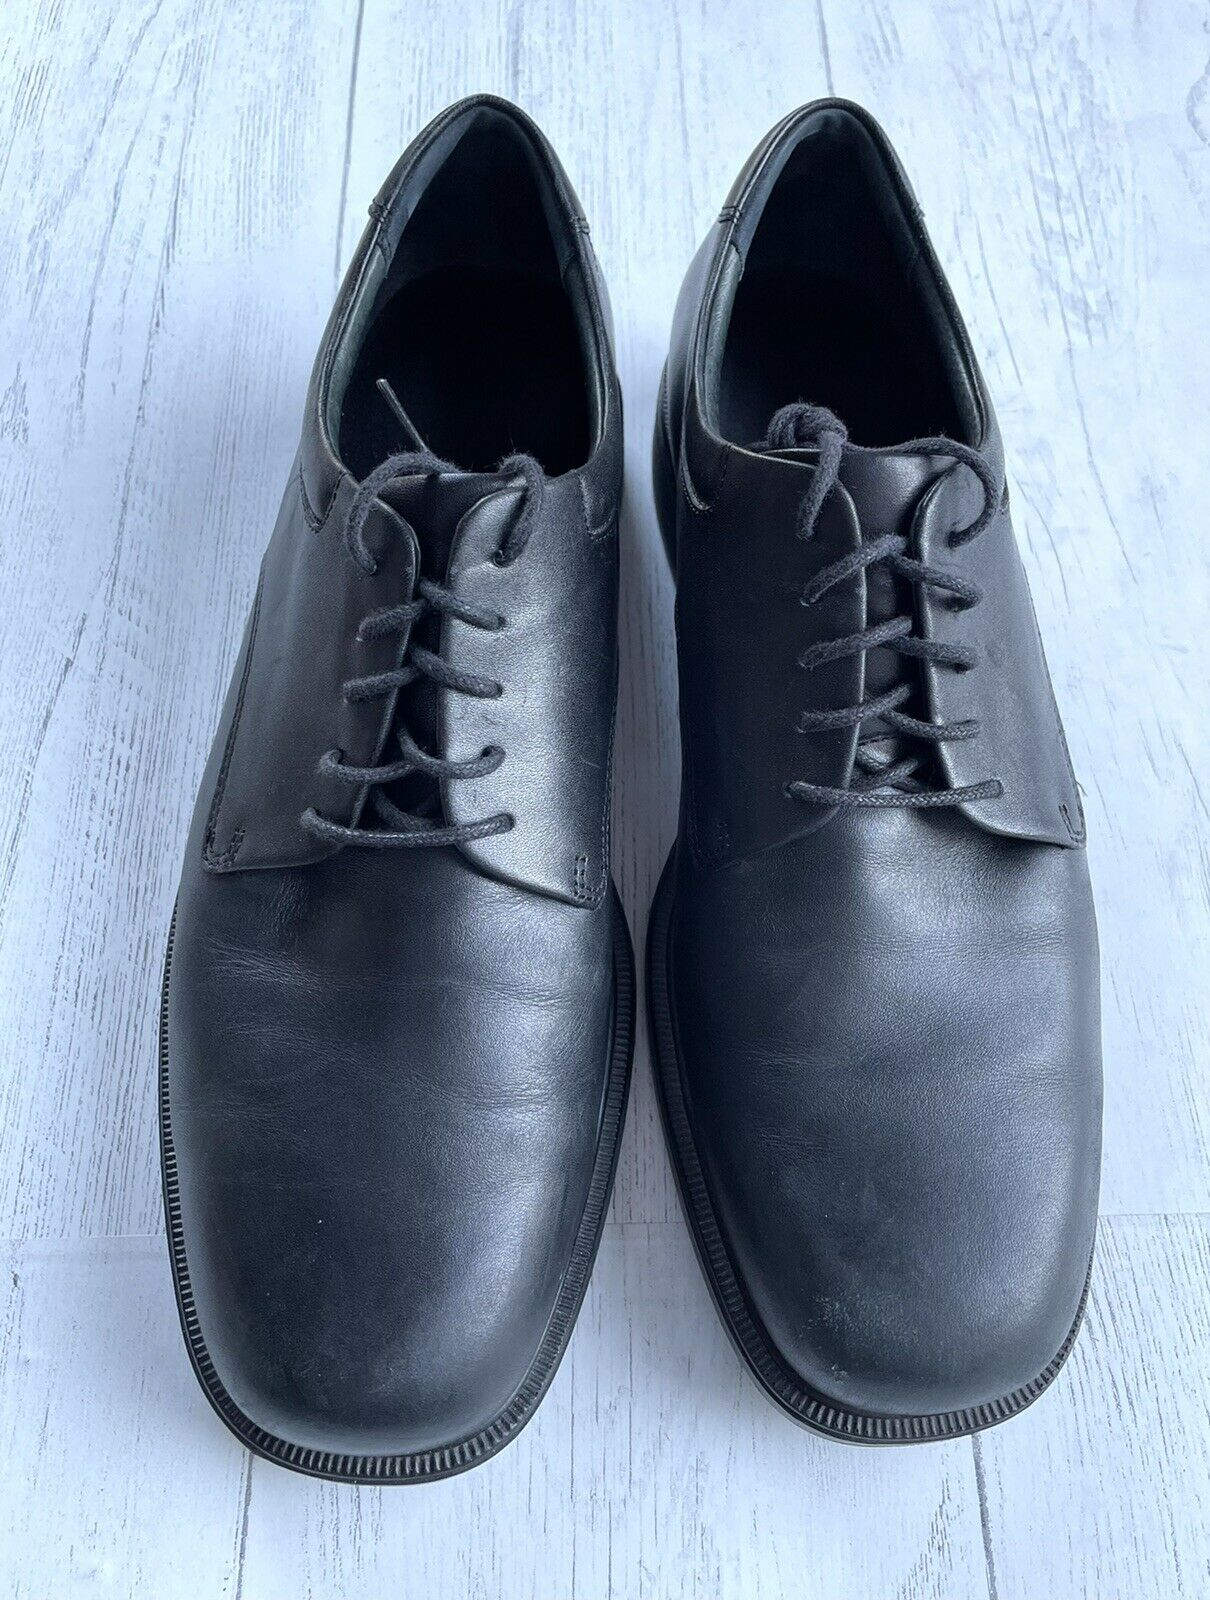 Rockport Mens Margin APM2031C Black Leather Oxford Dress Shoes Lace Up Size 13 M